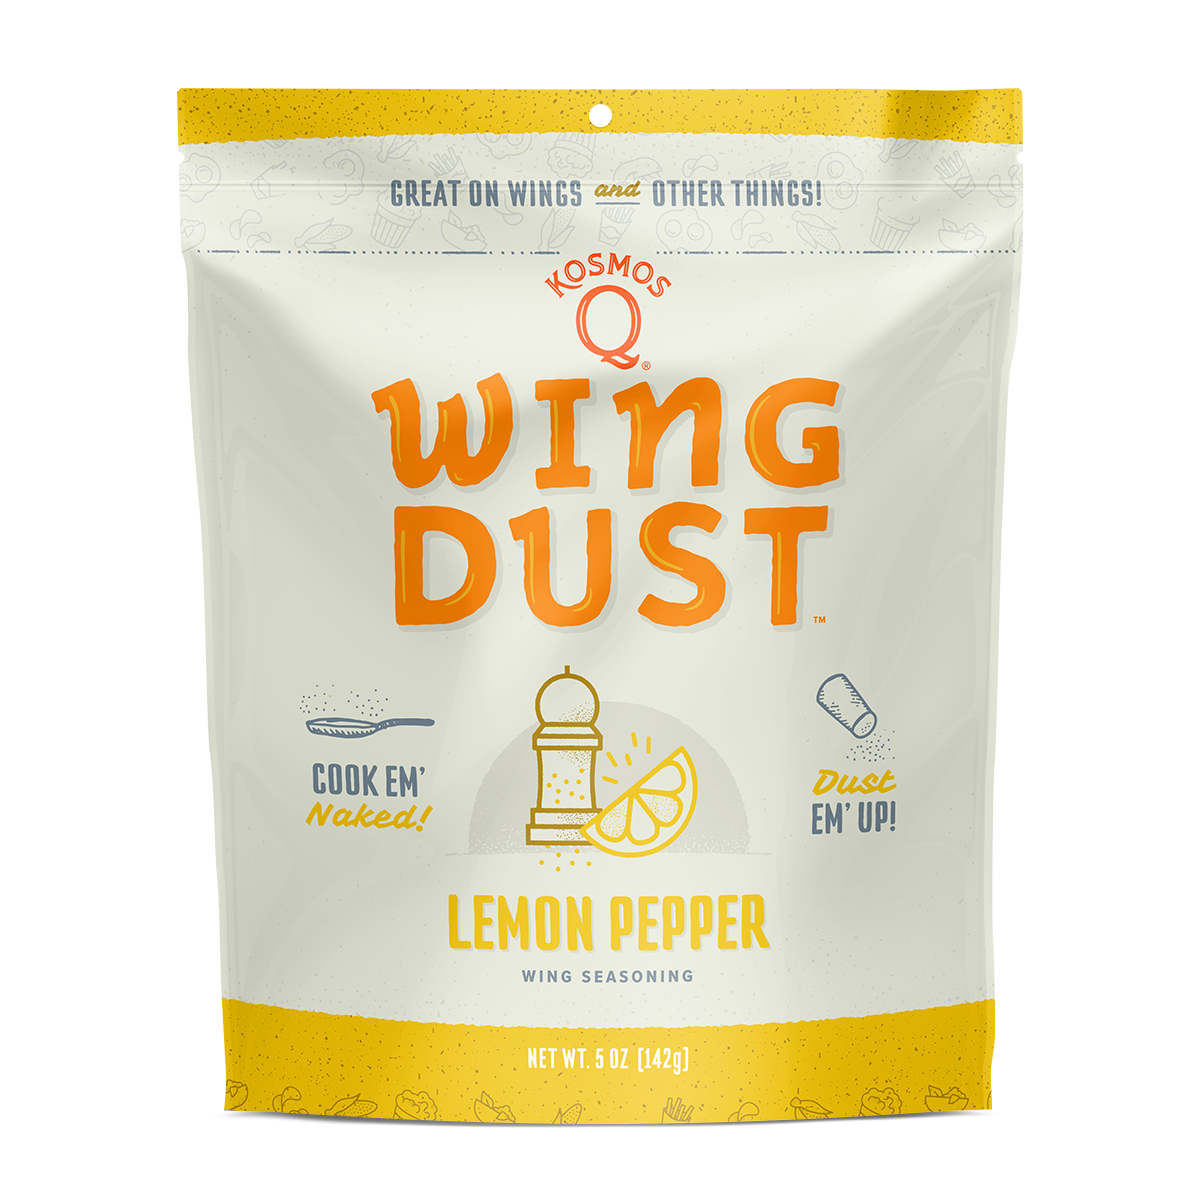 Kosmos Salt and Vinegar Wing Dust – BBQ Pit Stop